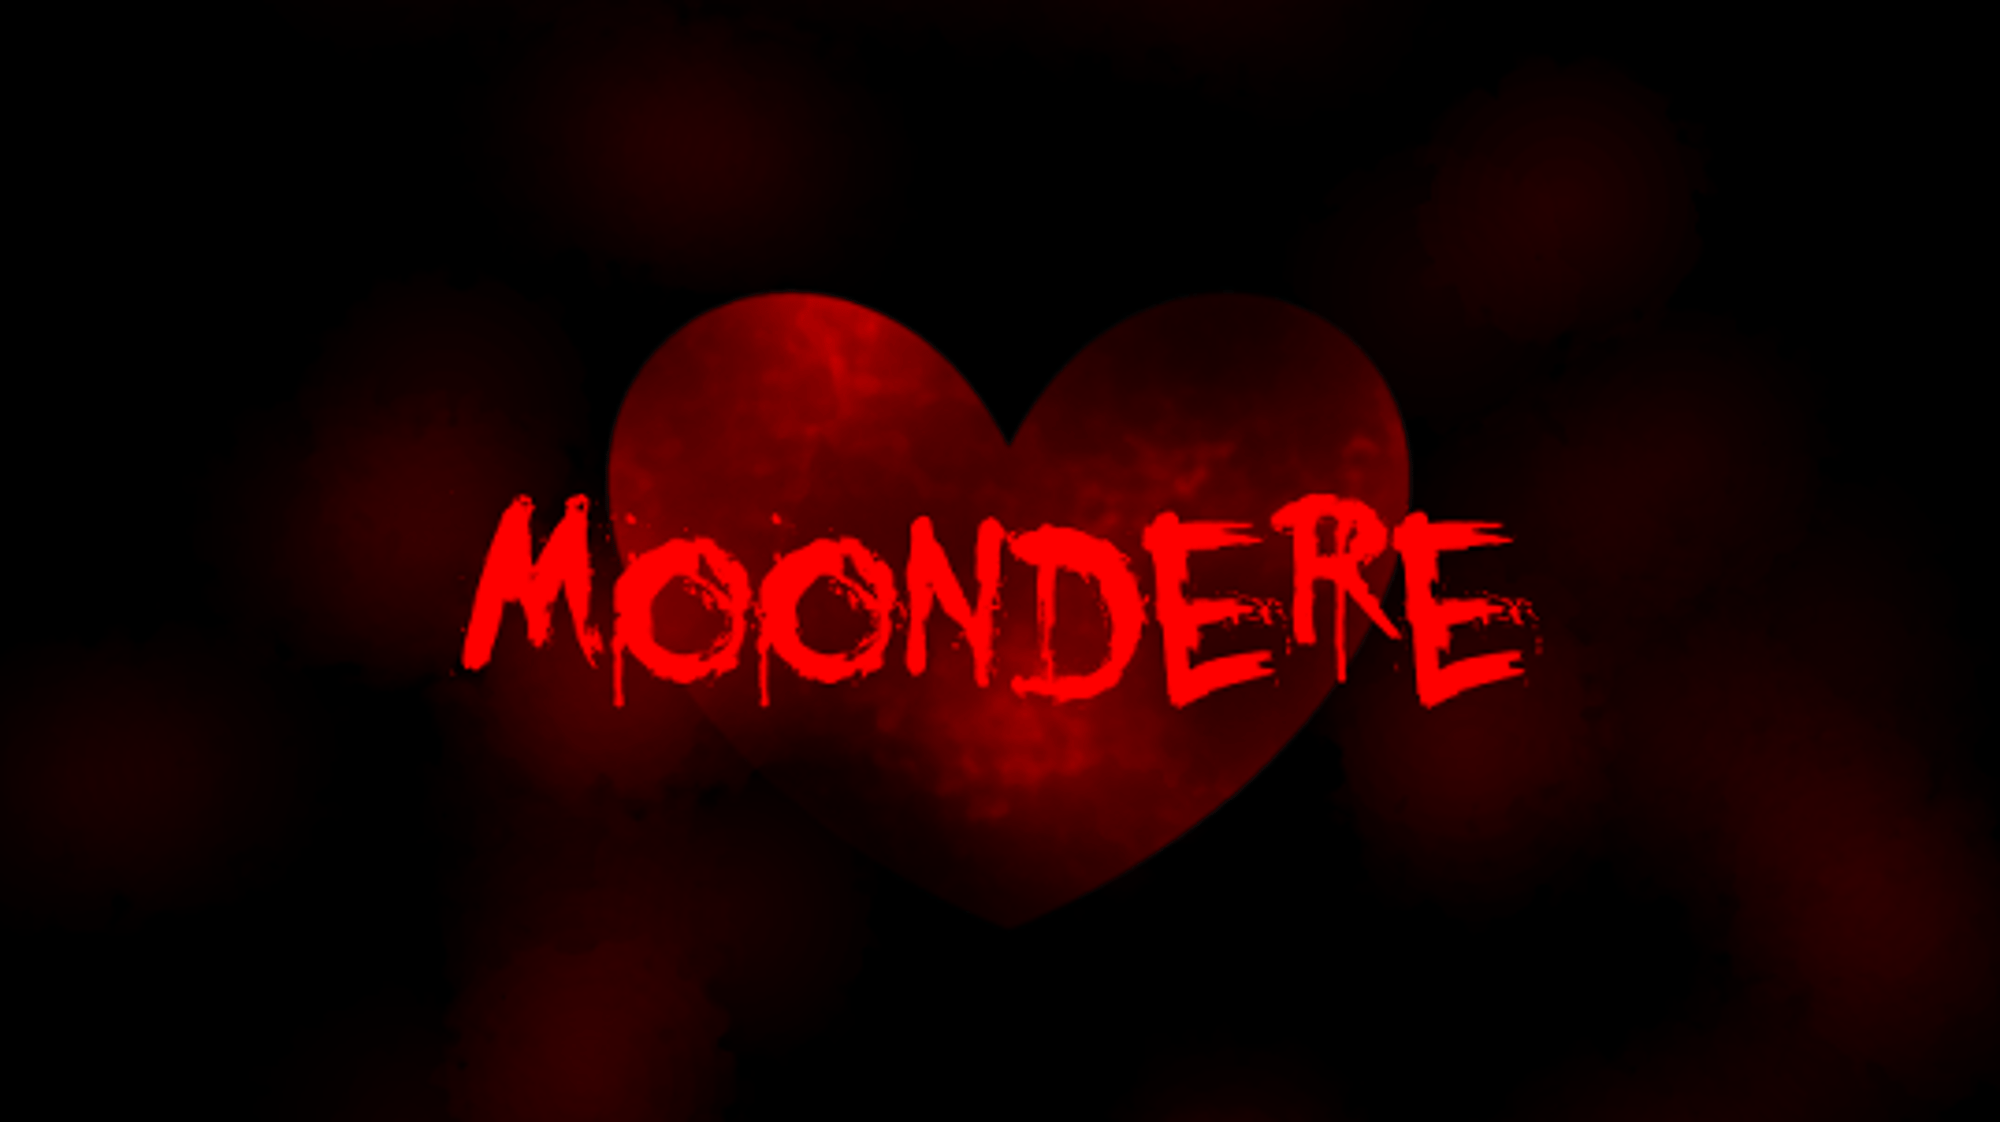 Moonshine (Yandere)